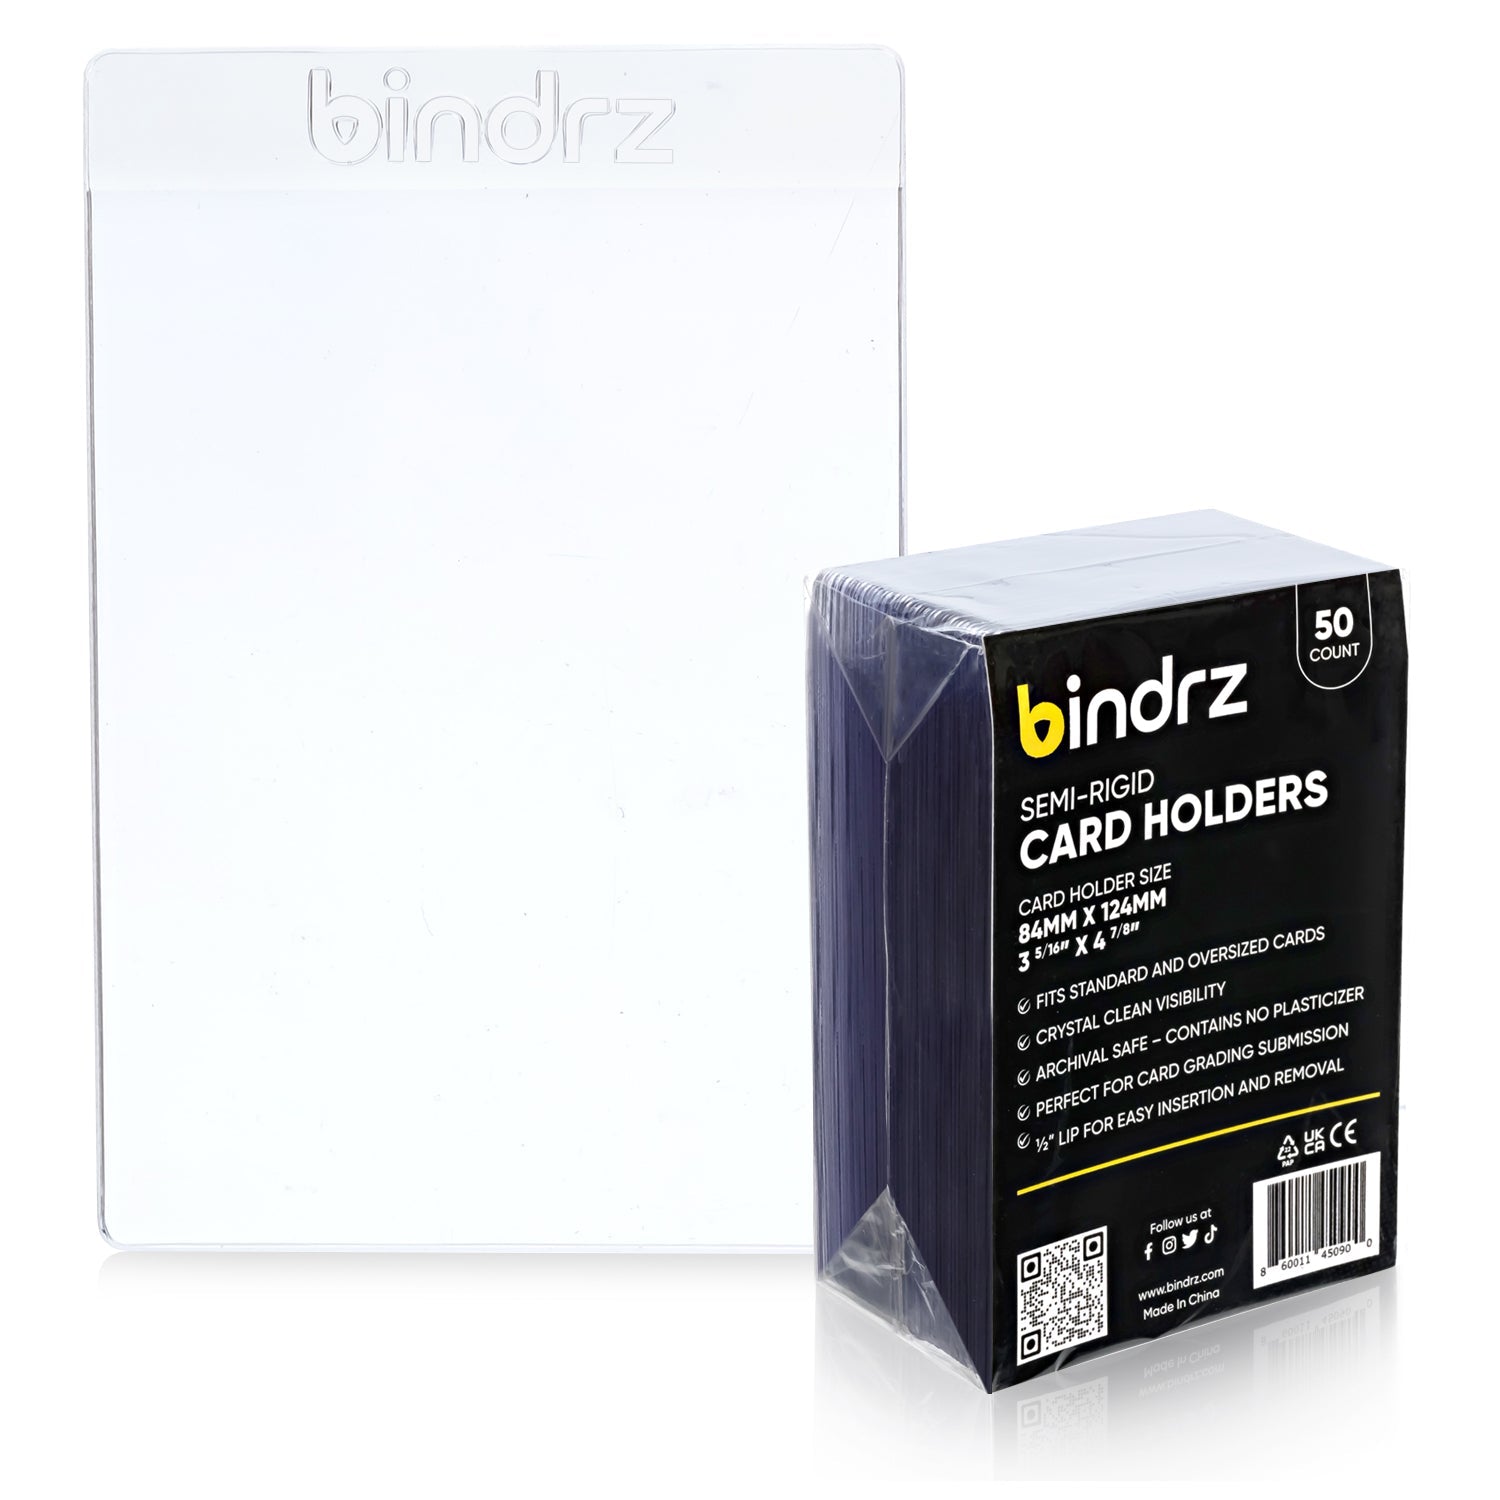 Semi-Rigid Card Holders - bindrz #size_50